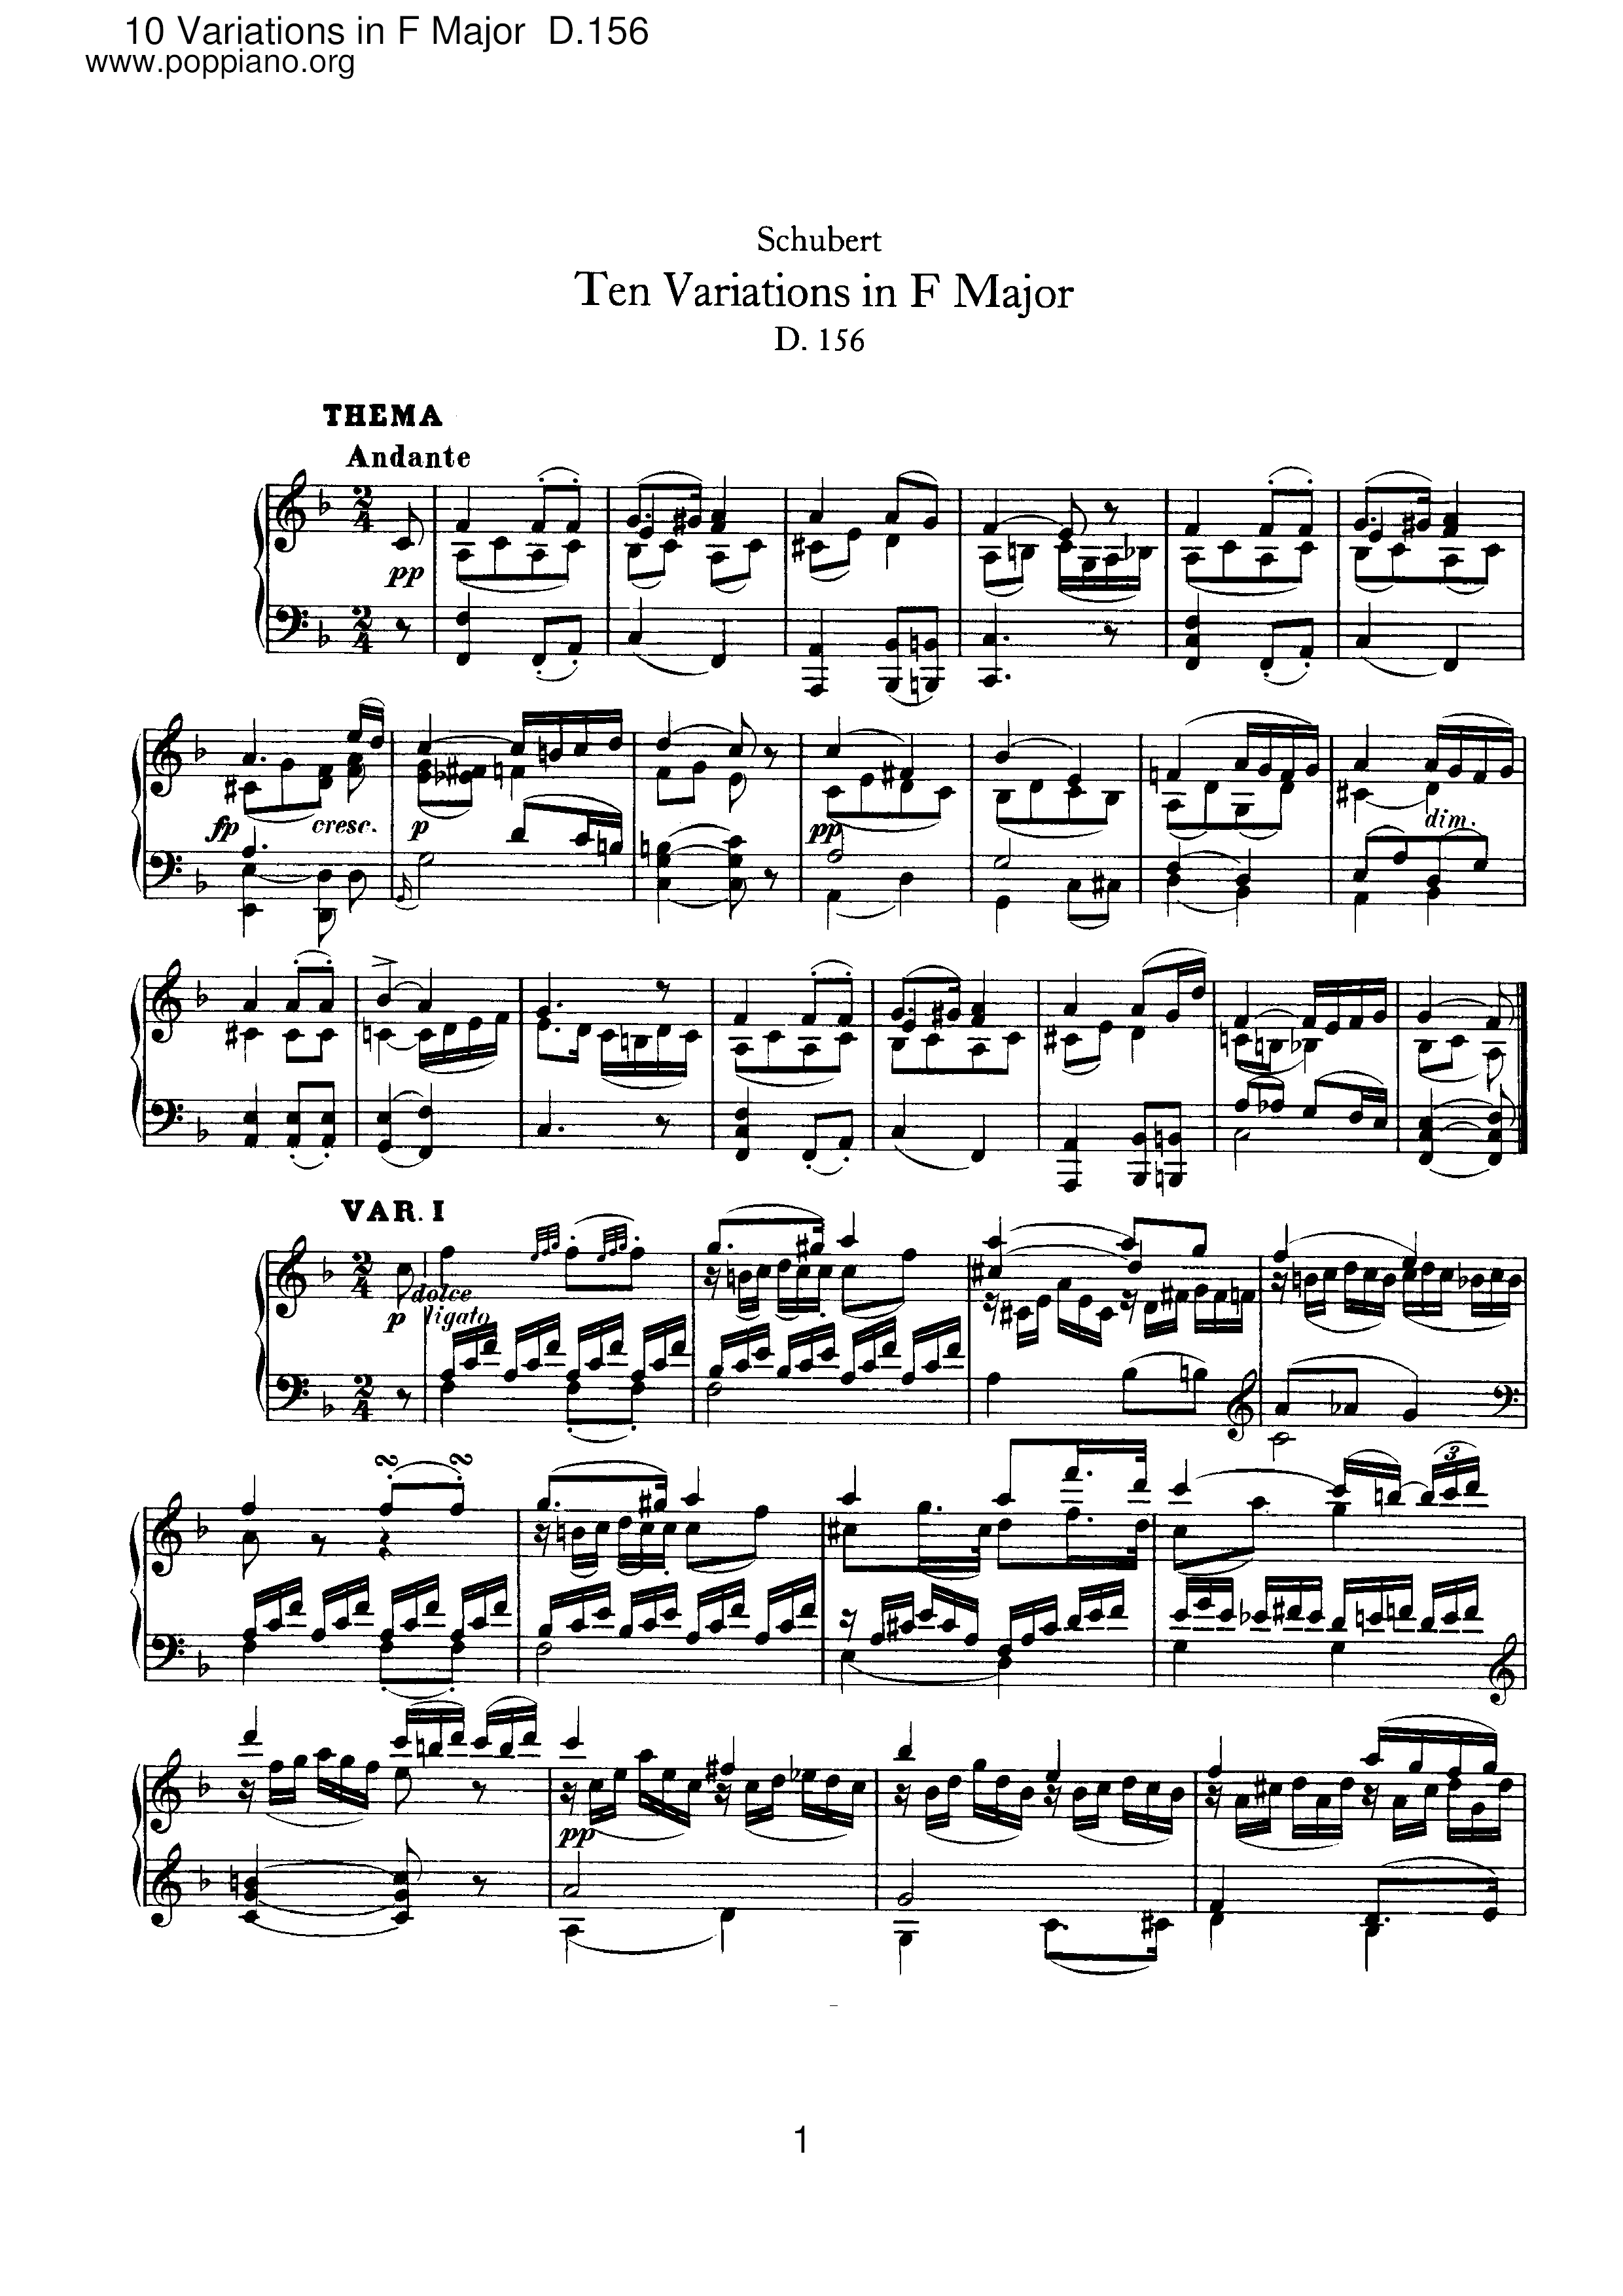 10 Variations in F major, D.156 Score